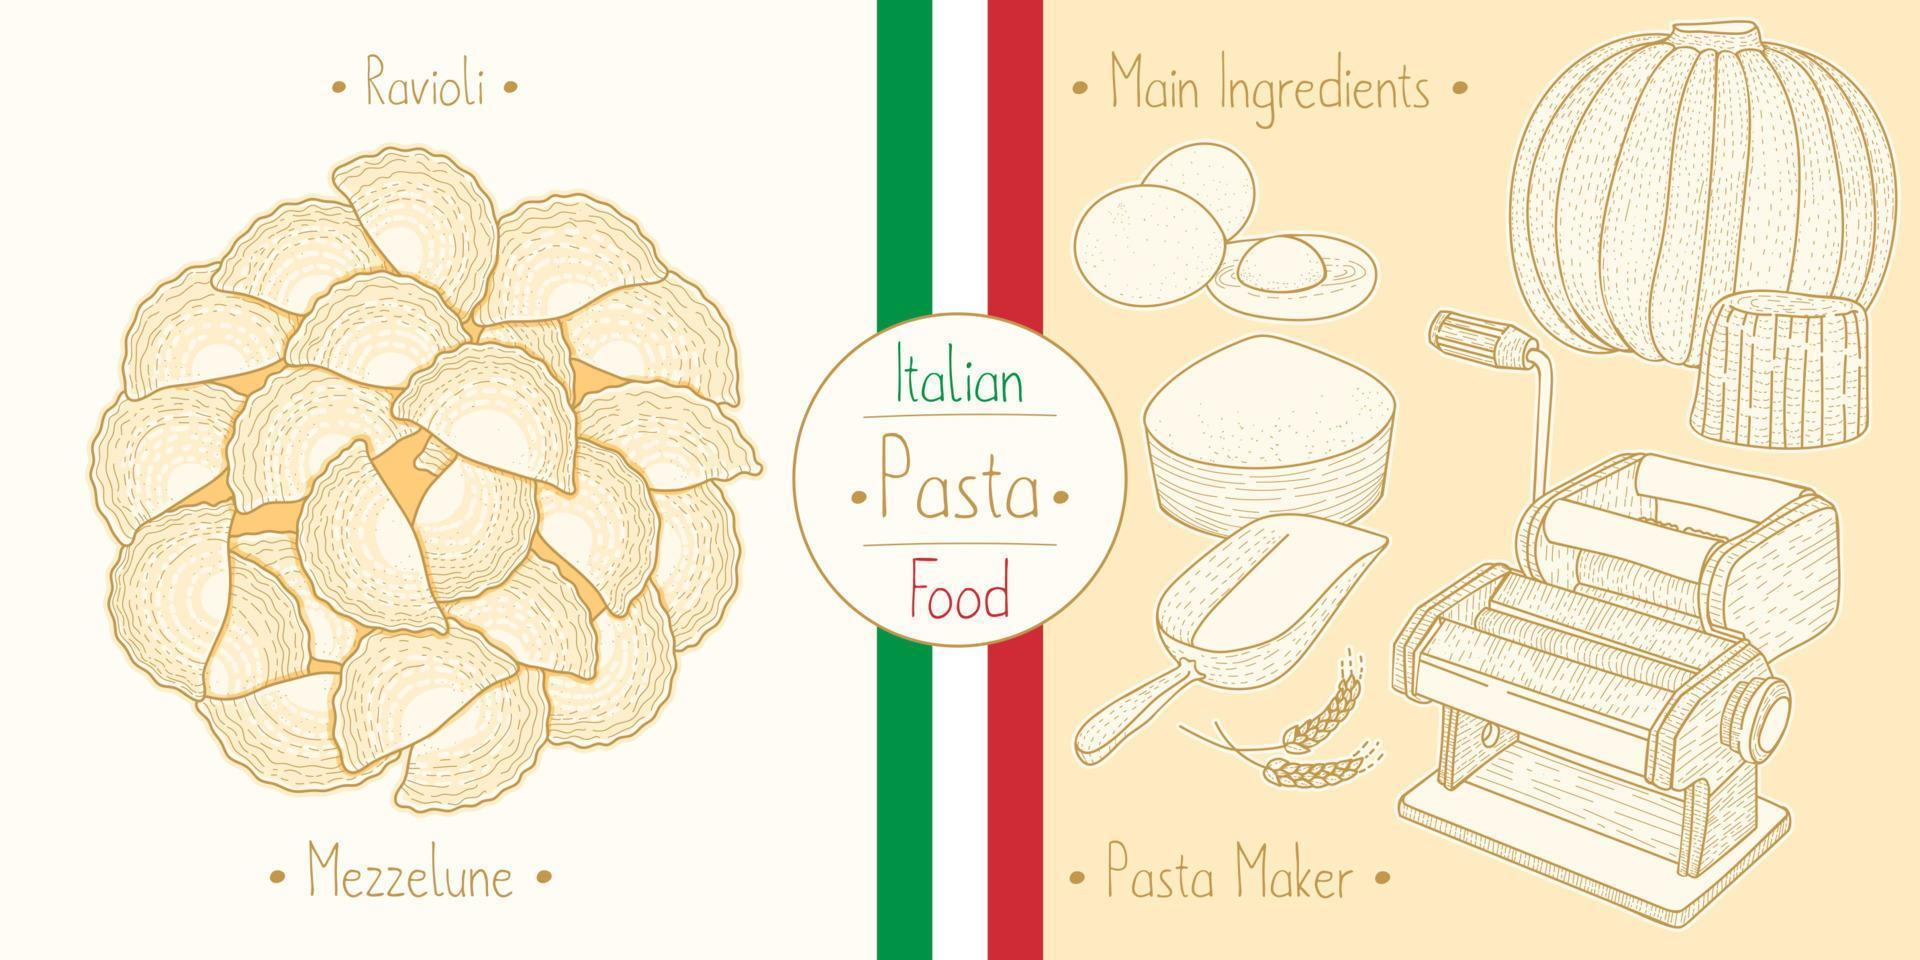 massa de comida italiana com recheio de ravioli mezzelune vetor